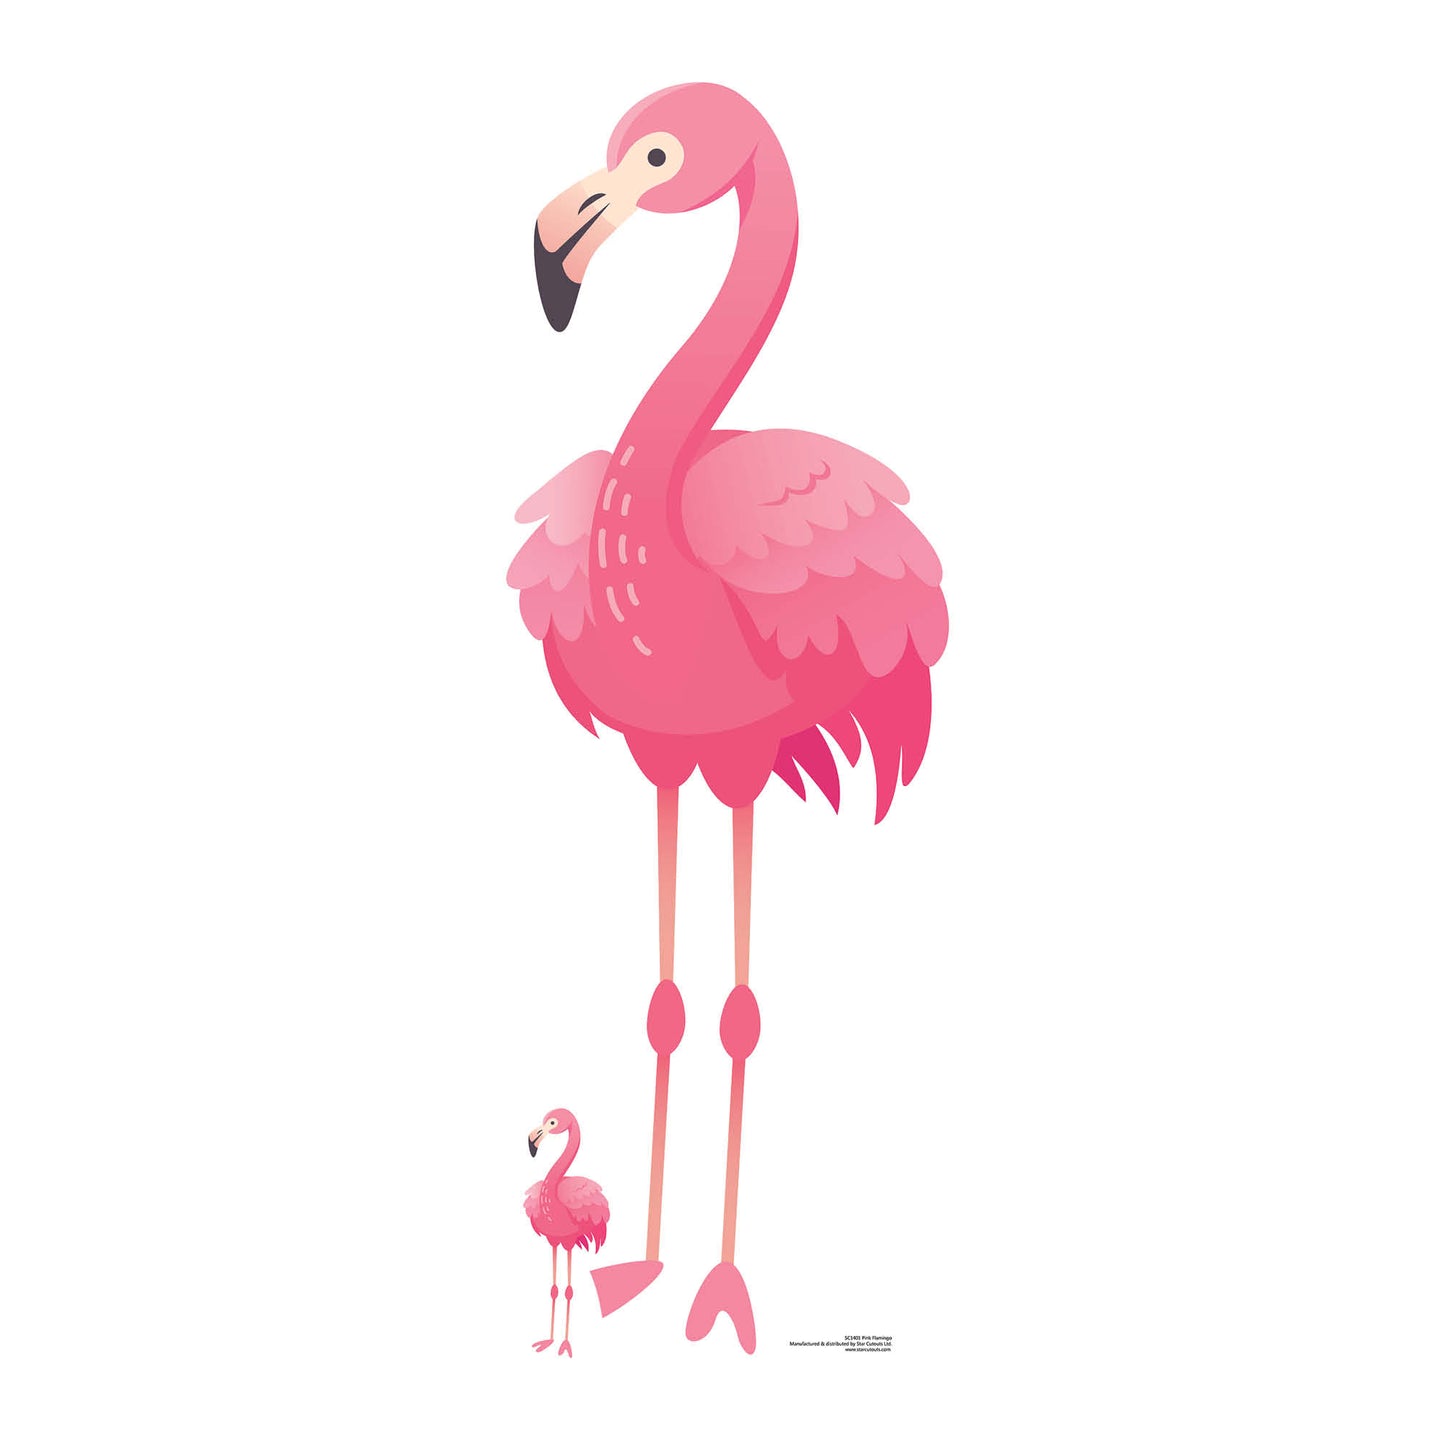 SC1401 Pink Flamingo Cardboard Cut Out Height 150cm - Star Cutouts